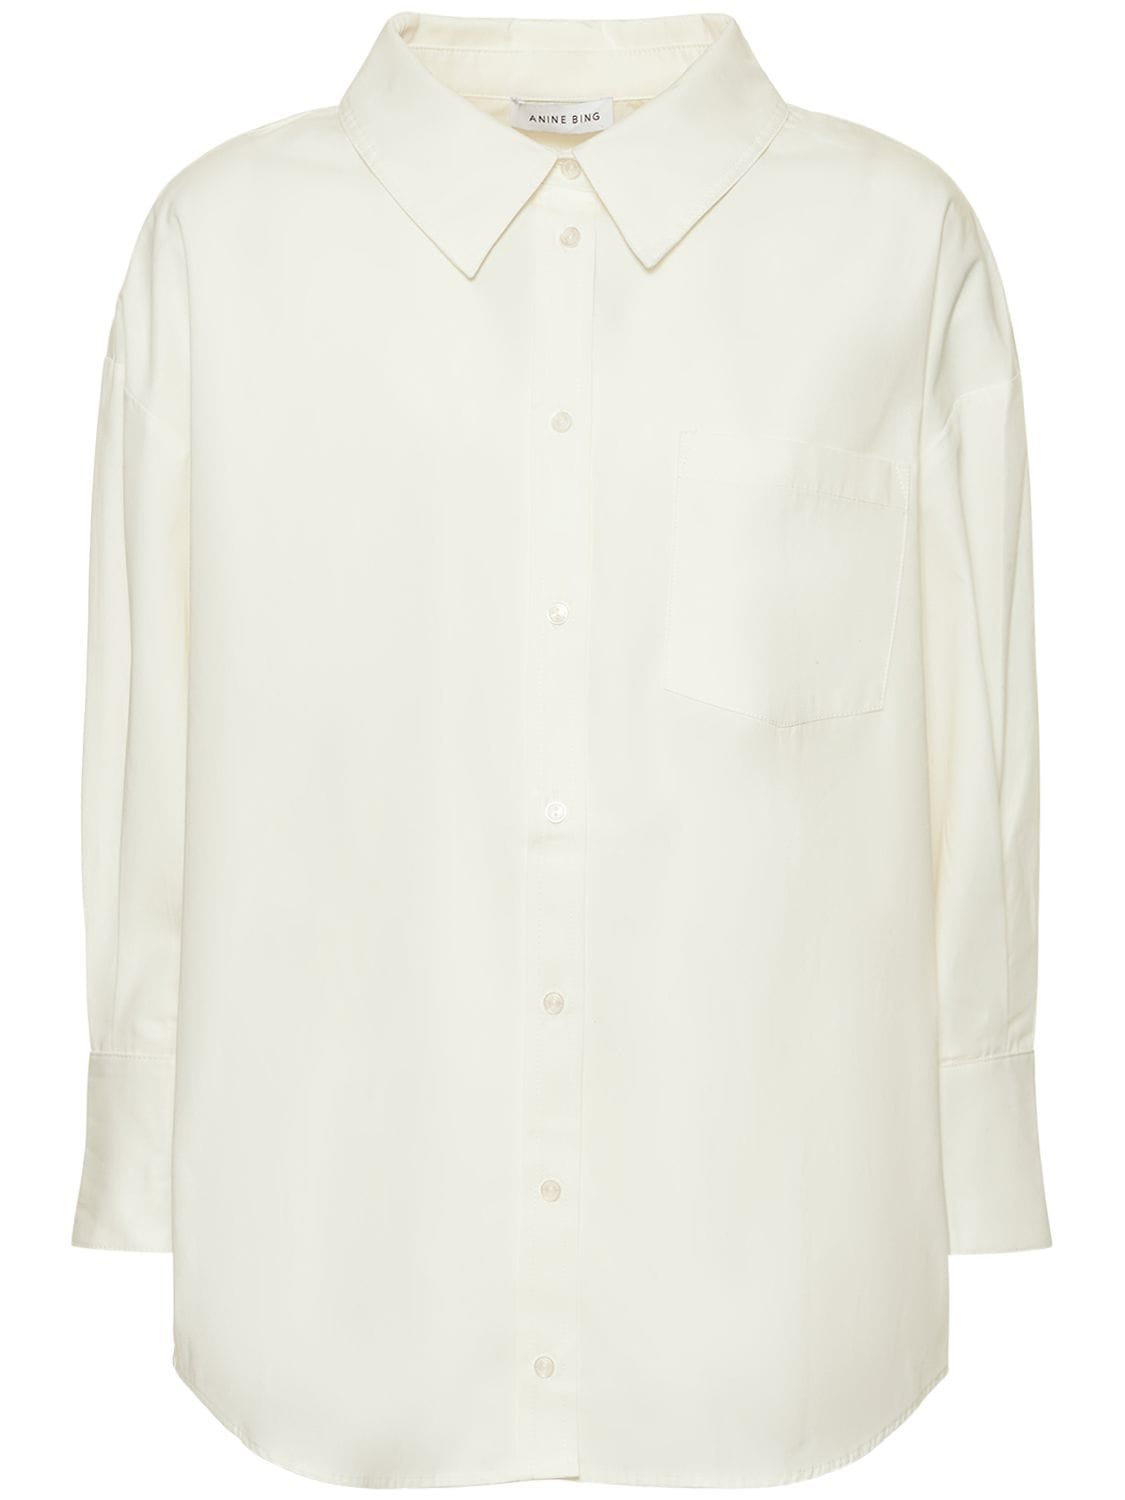 Anine Bing Mika Cotton Poplin Shirt In White And Lavender Stripe